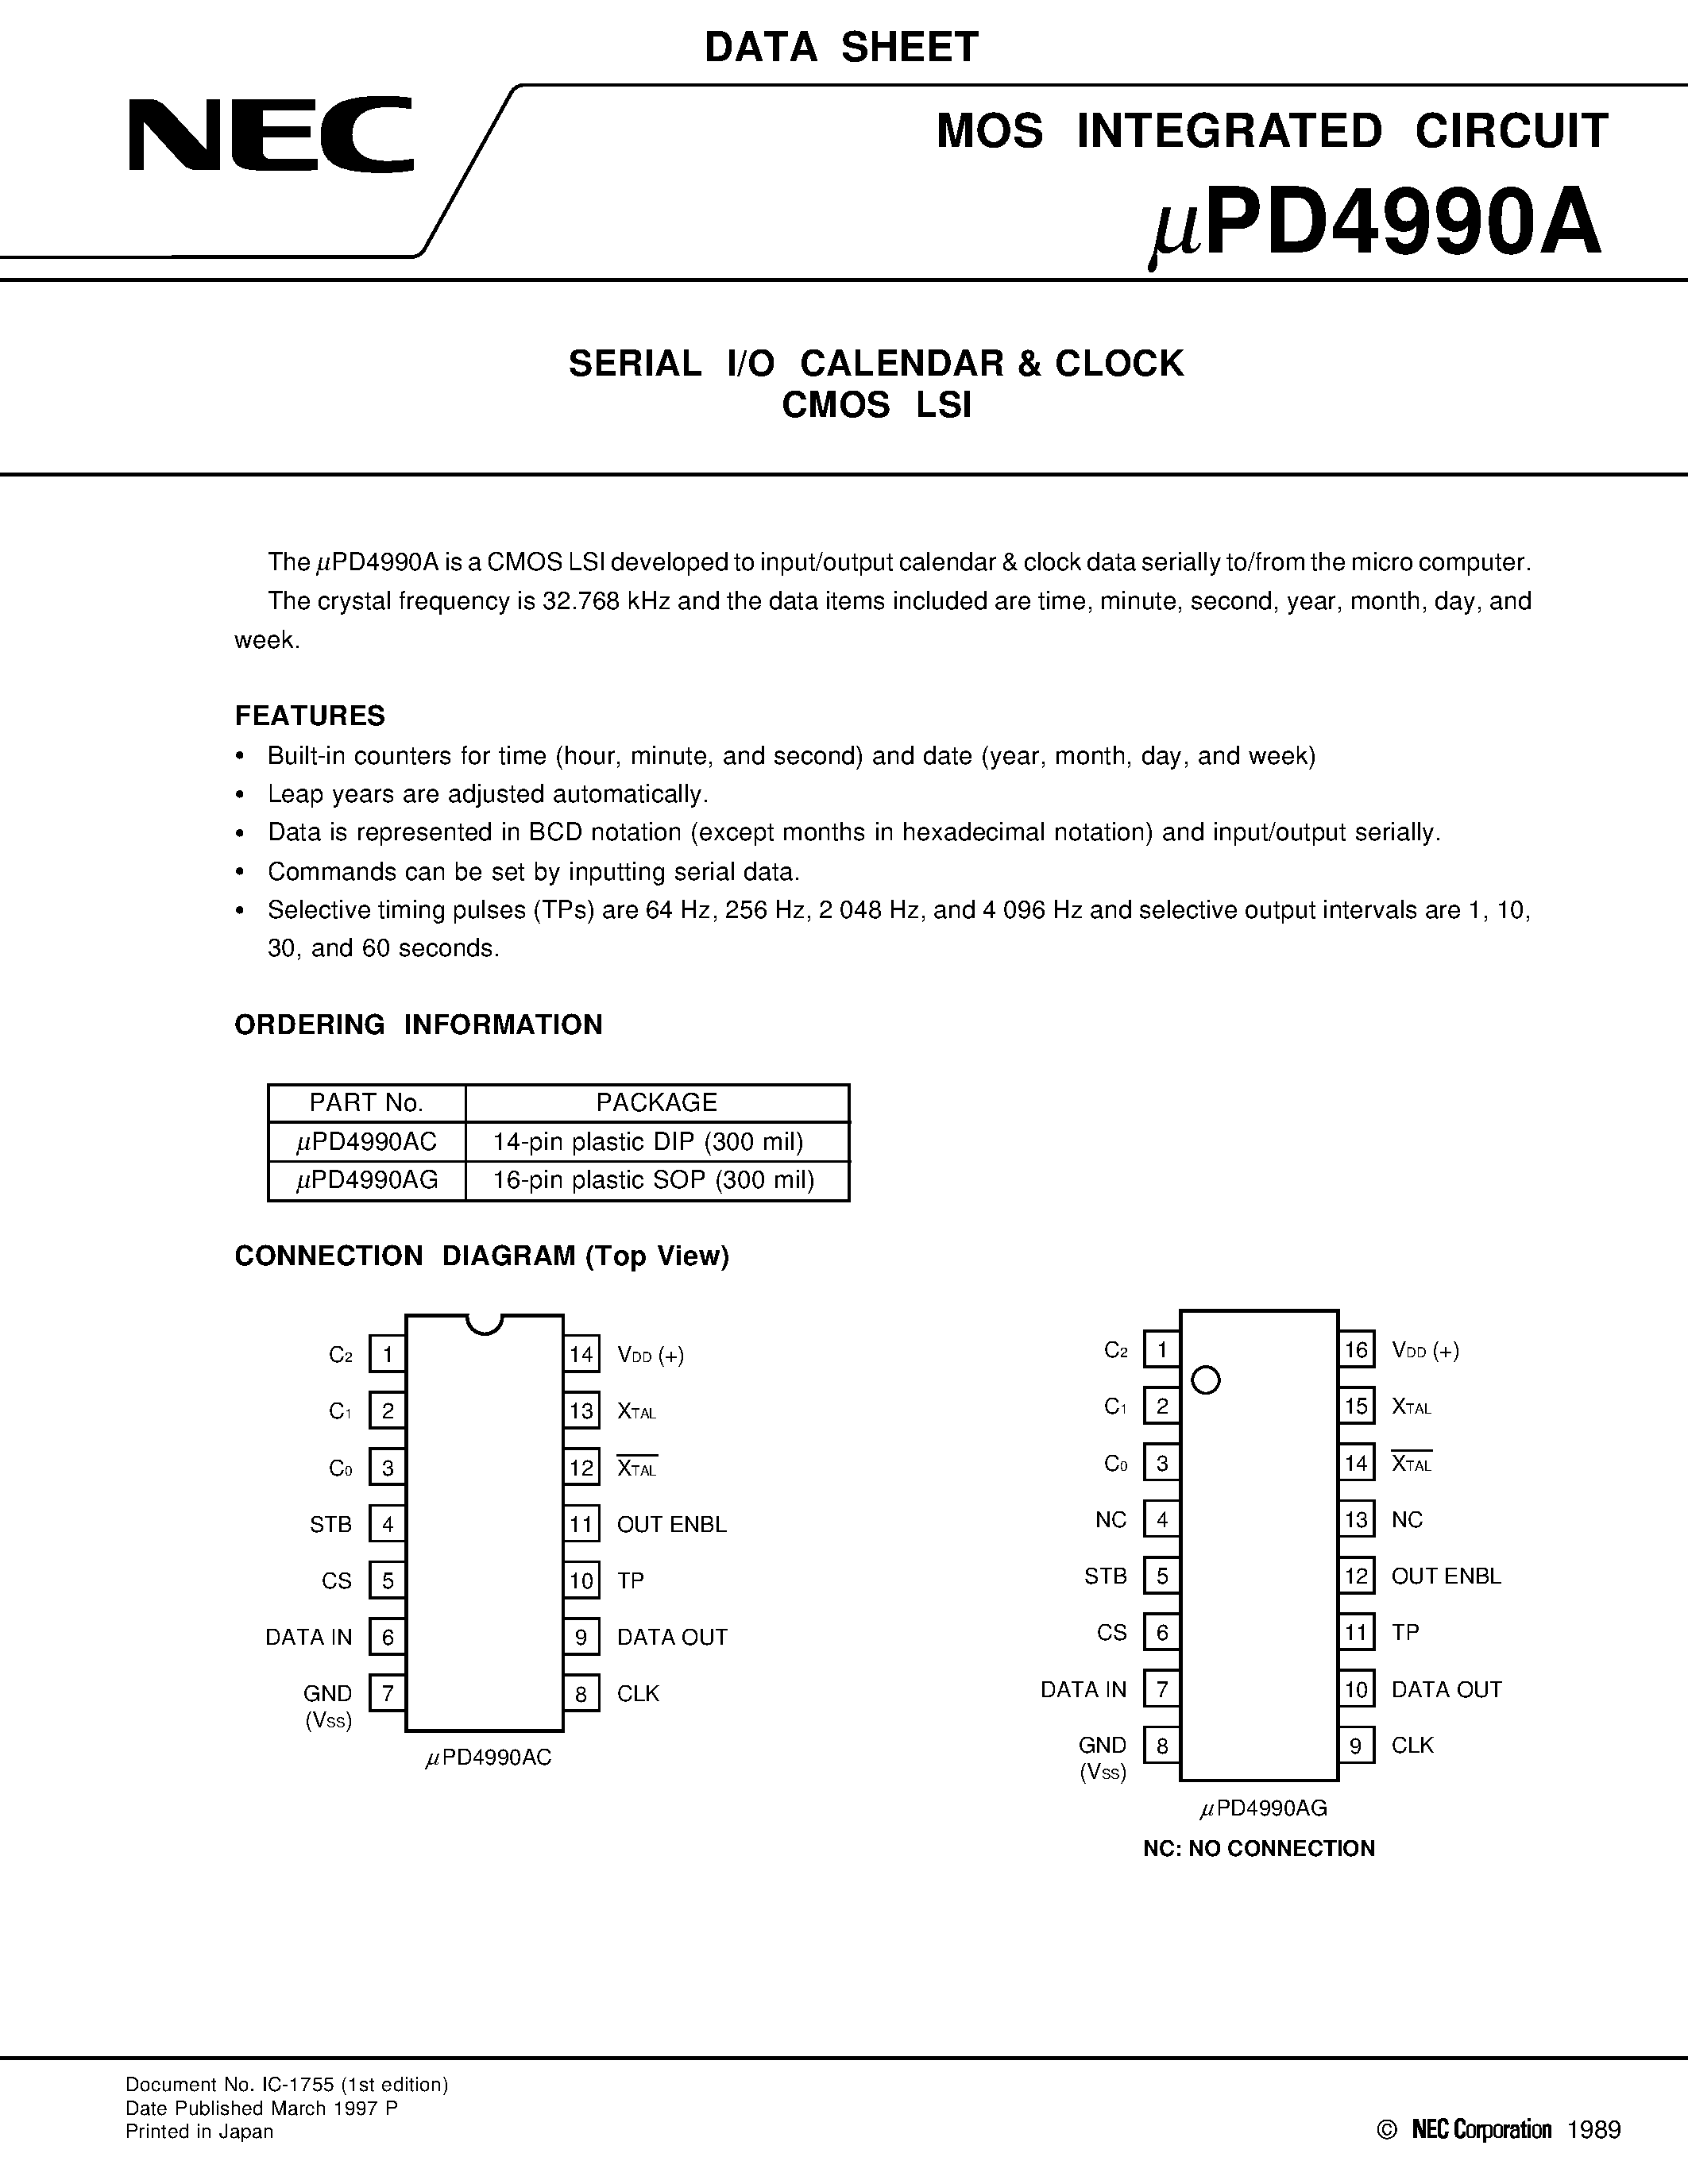 Datasheet UPD4990AC - SERIAL I/O CALENDAR & CLOCK CMOS LSI page 1